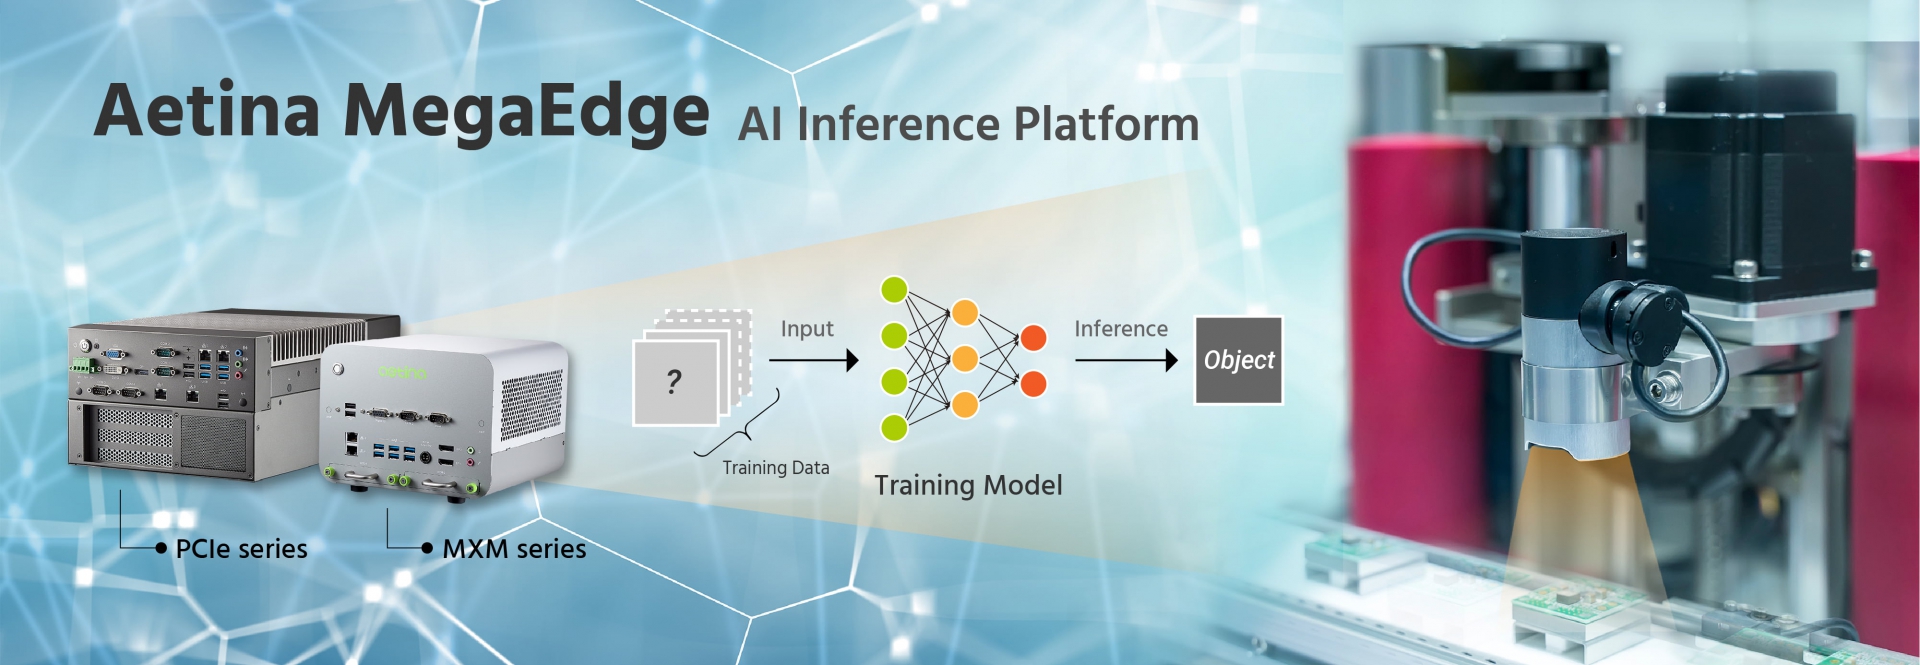 Aetina MegaEdge_AI Inference Platform